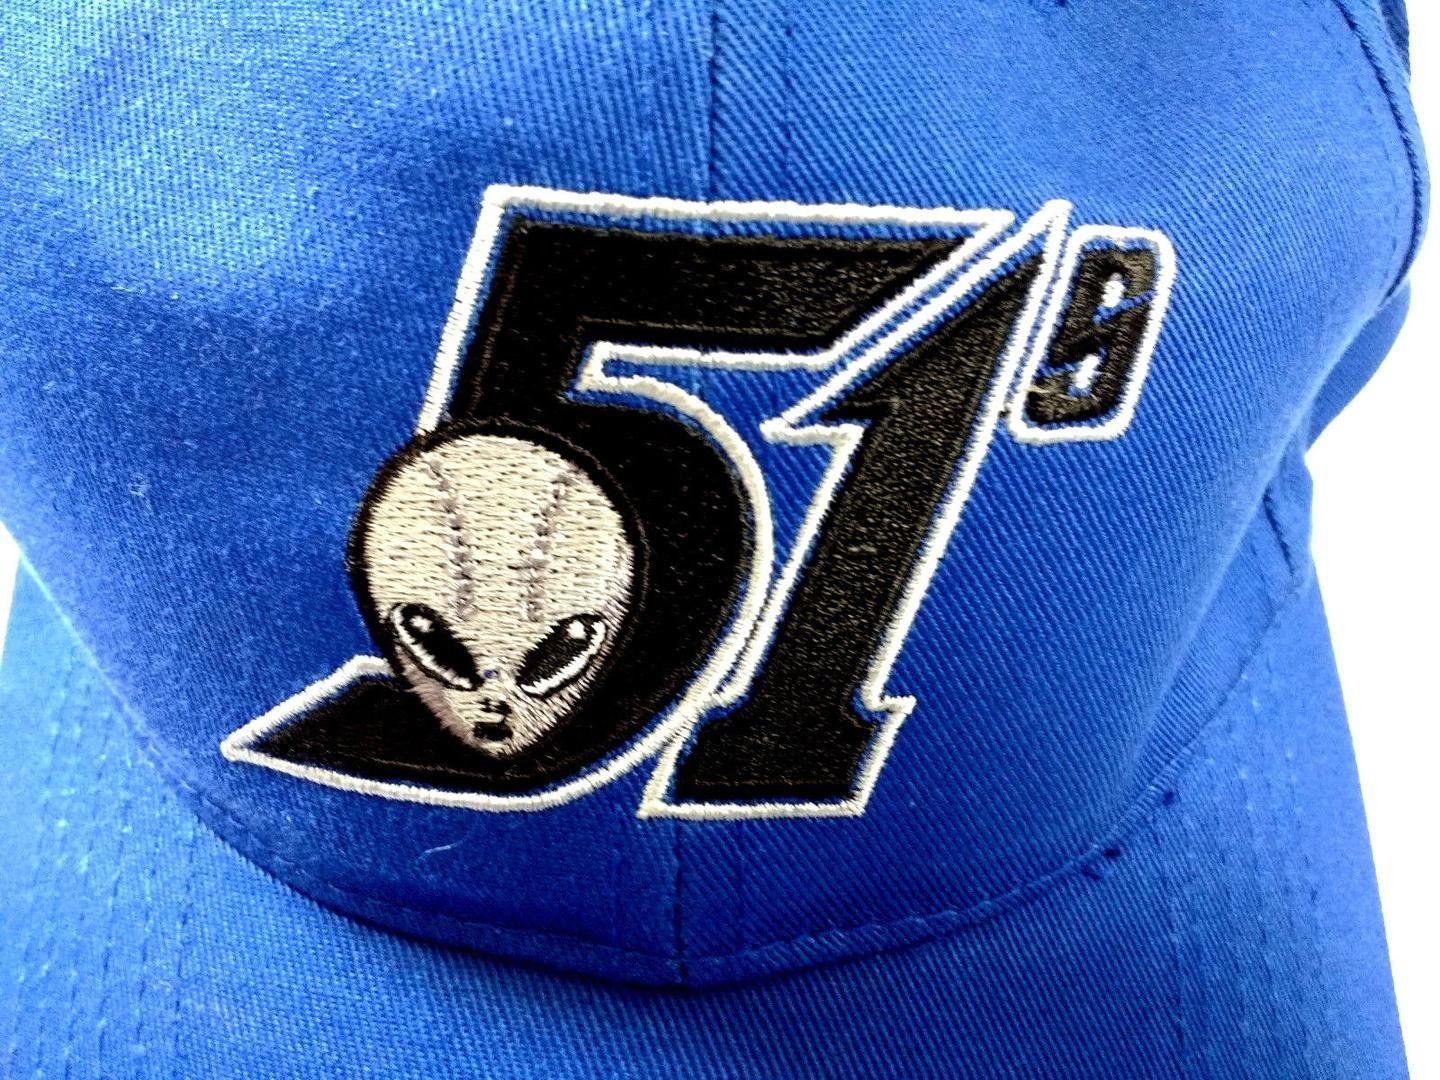 Las Vegas 51s Logo - Las Vegas 51s Minor League Baseball Team Hat Blue with Alien Logo